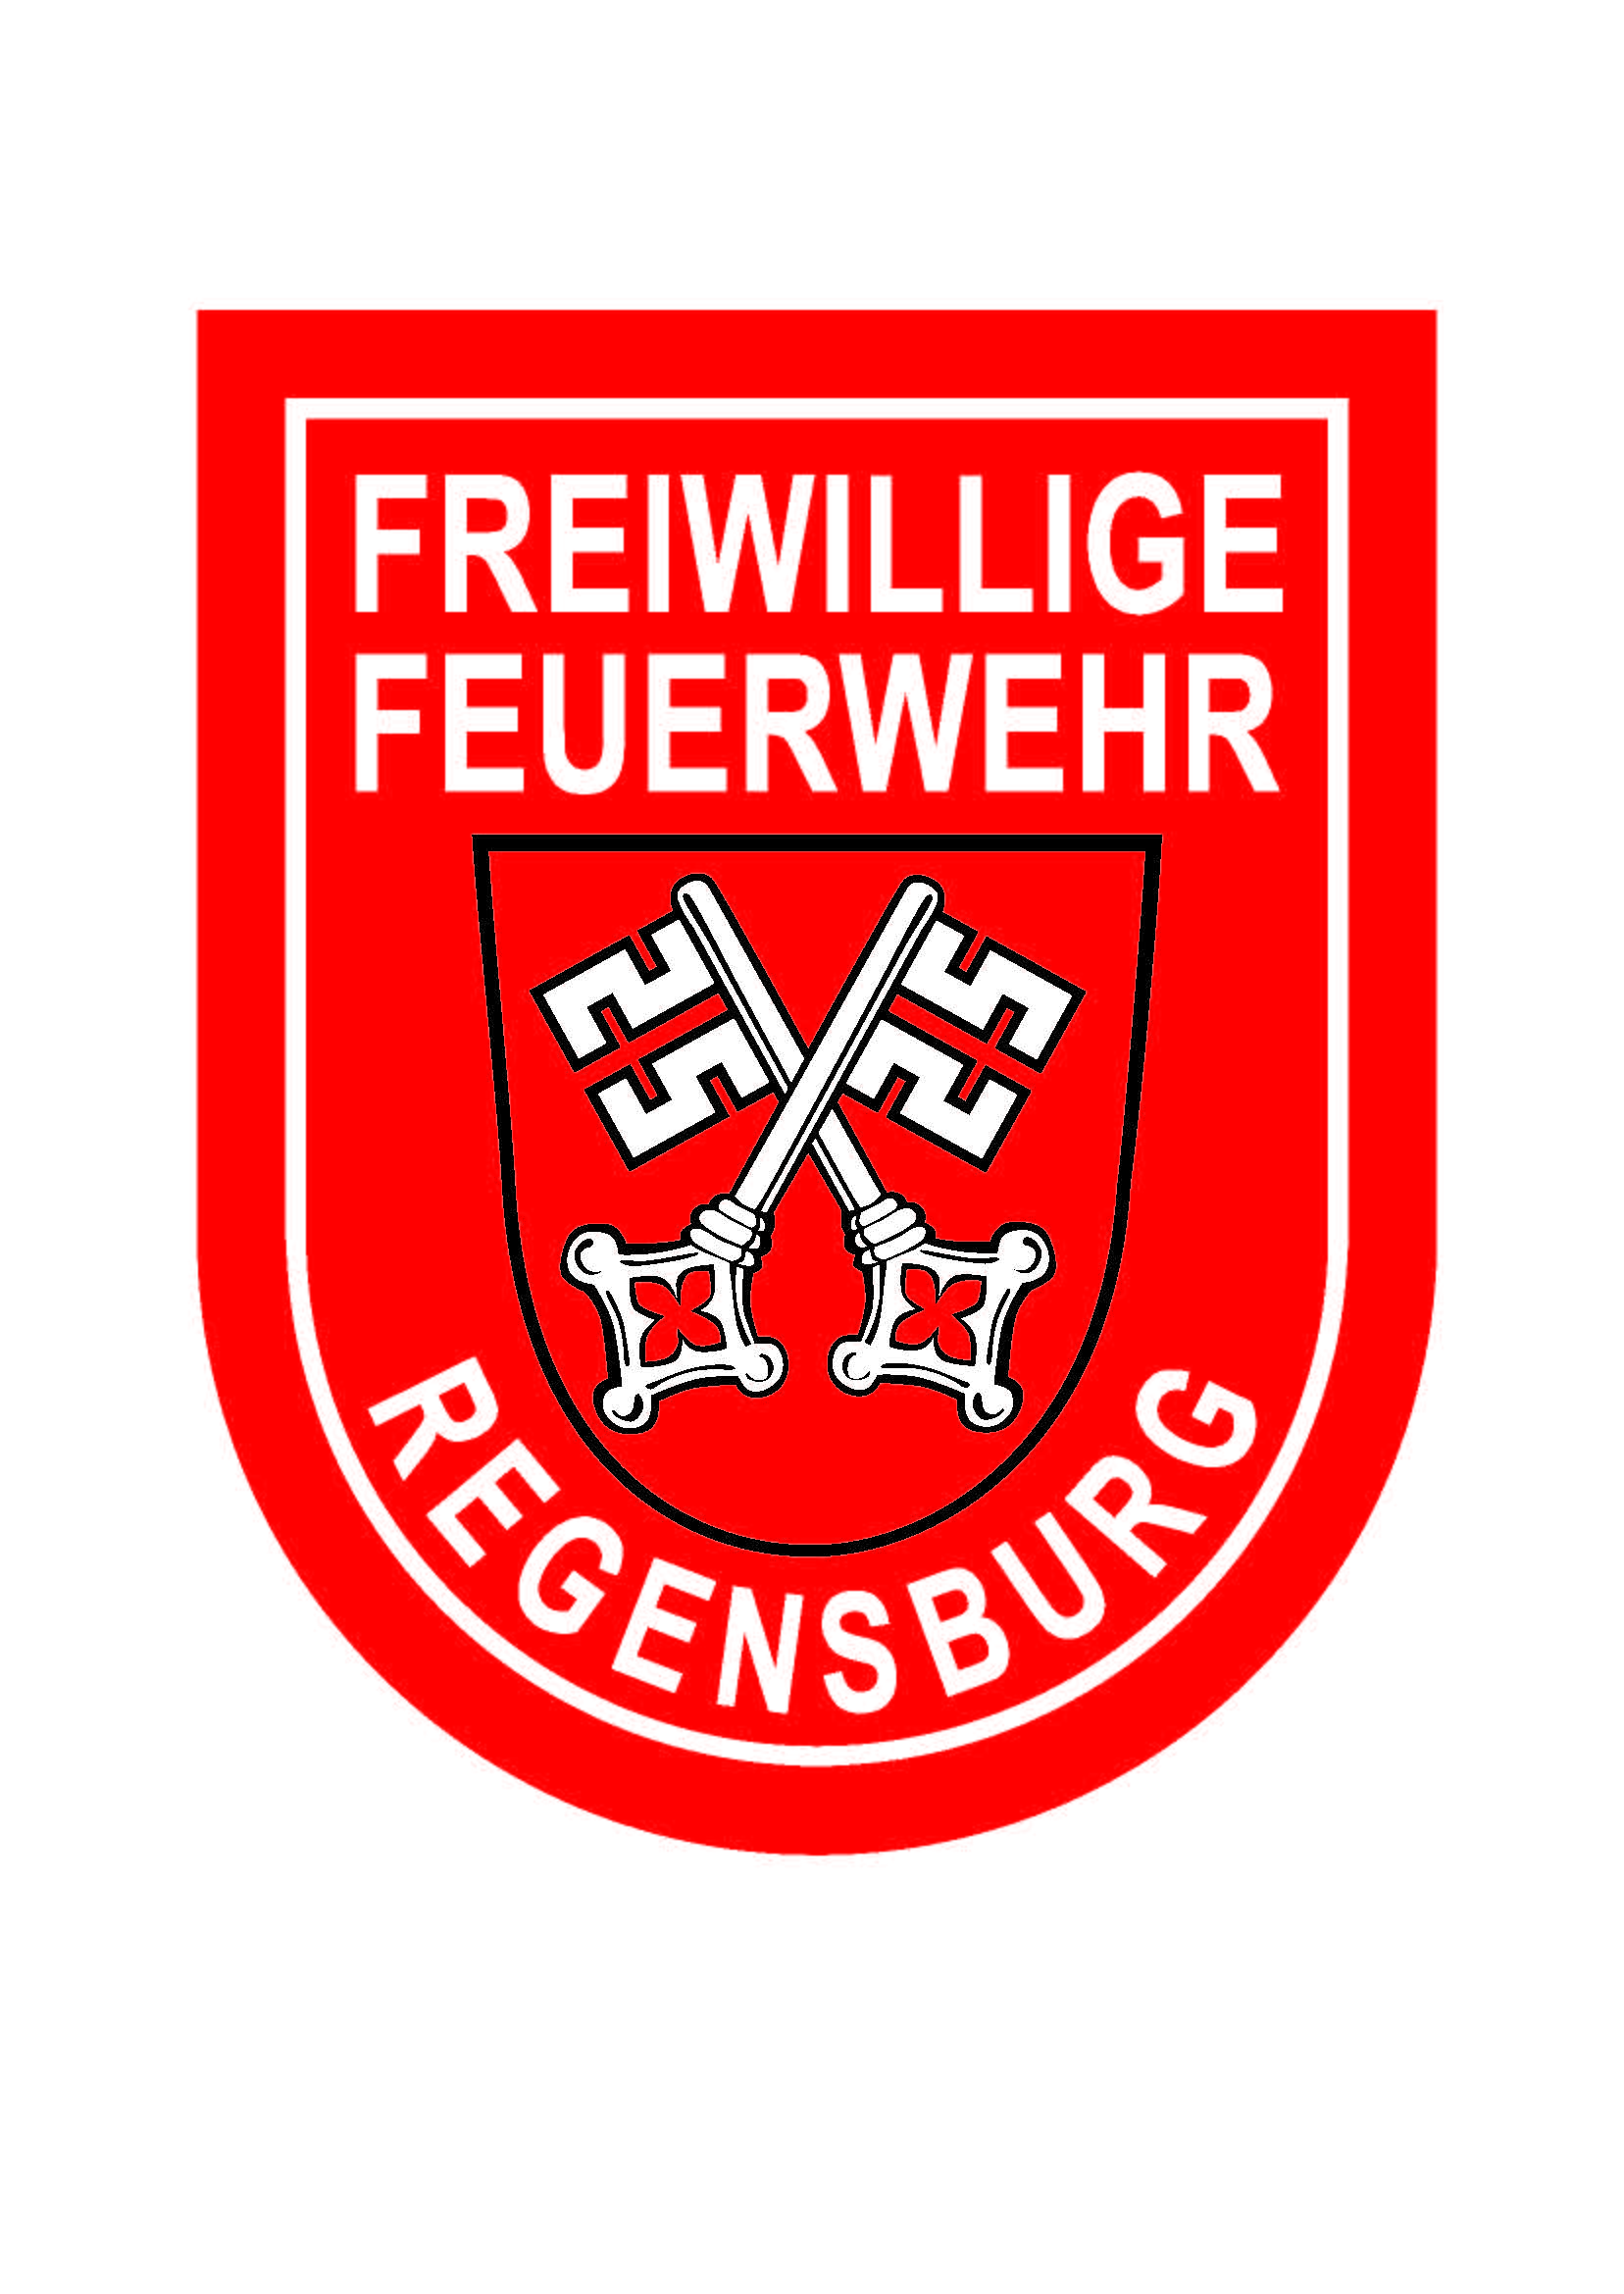 Freiwillige Feuerwehr Regensburg